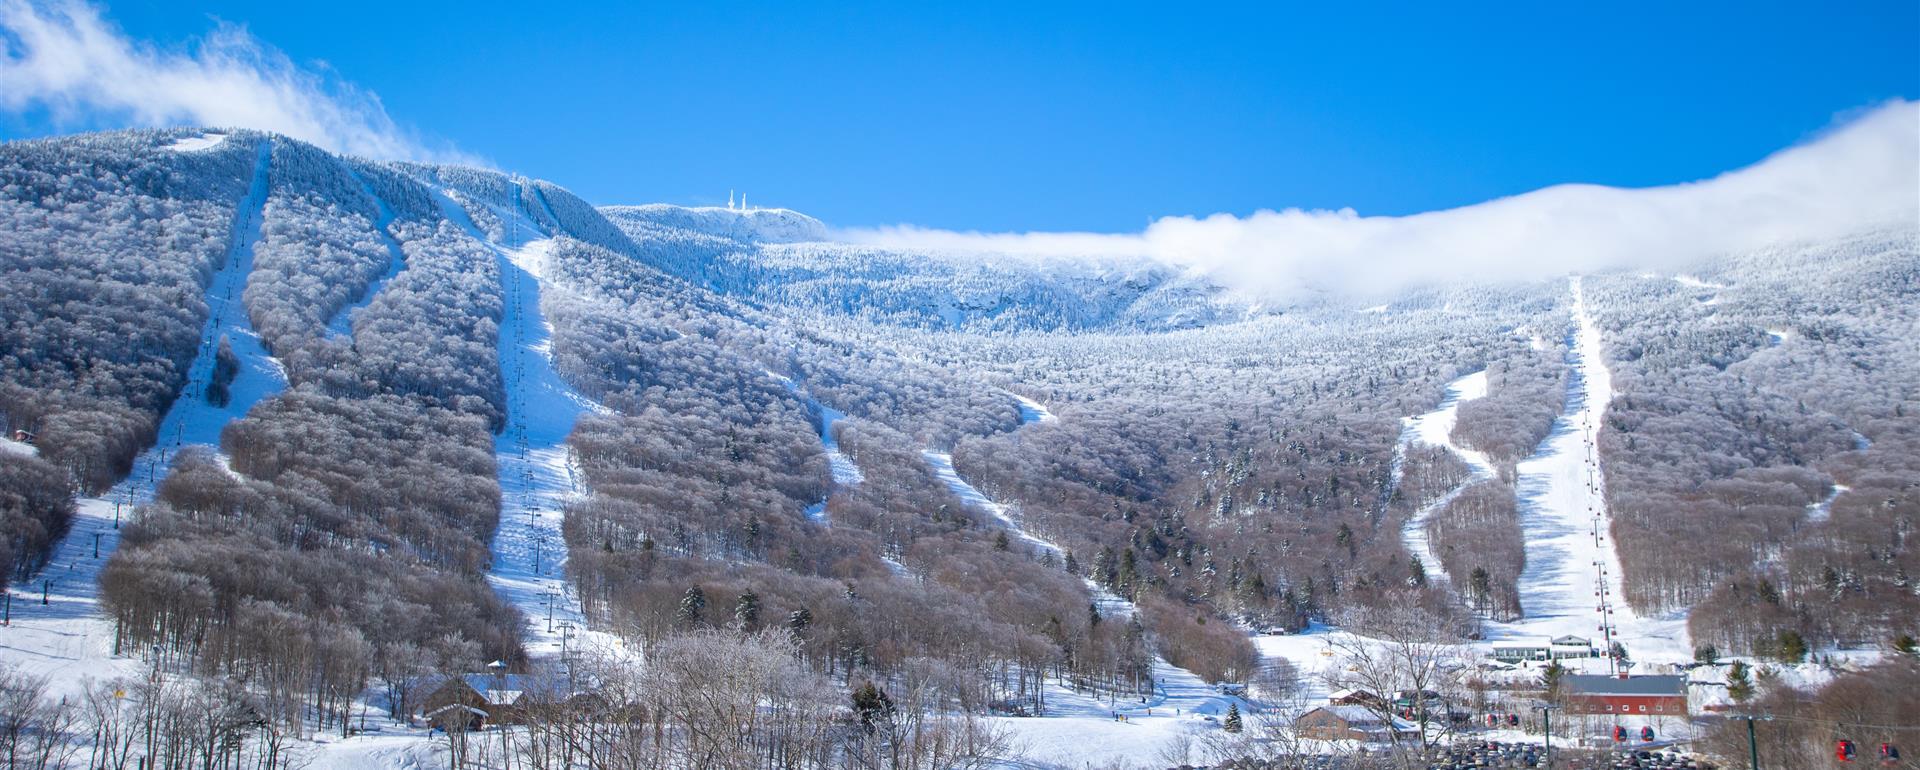 Apres Ski Photo Booth Rental For Winter Wonderland Themed Holiday